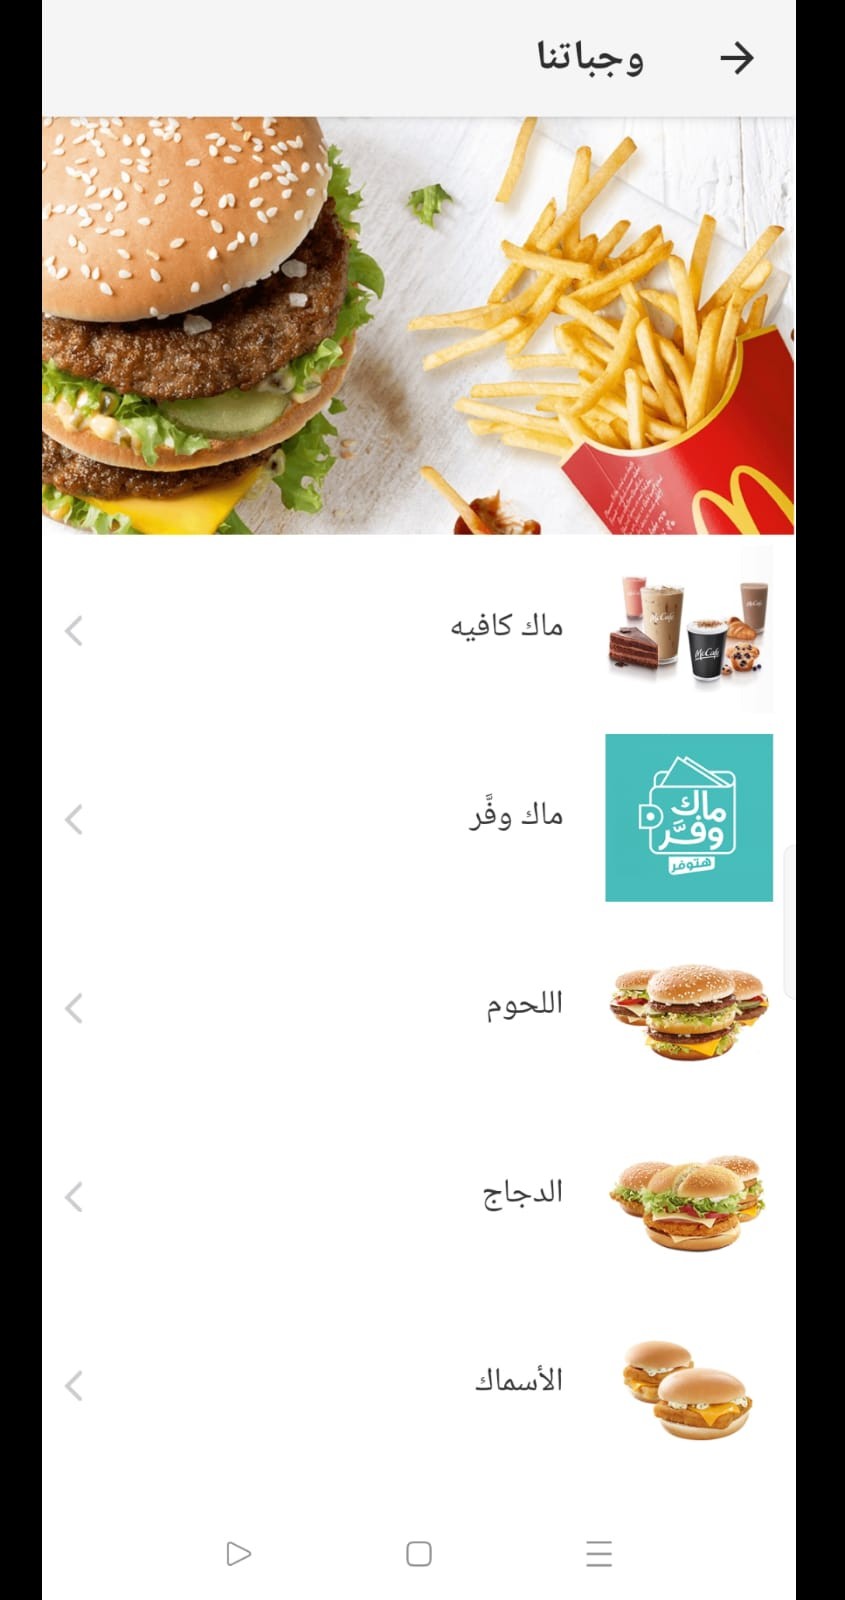 ماكدونالدز for Android